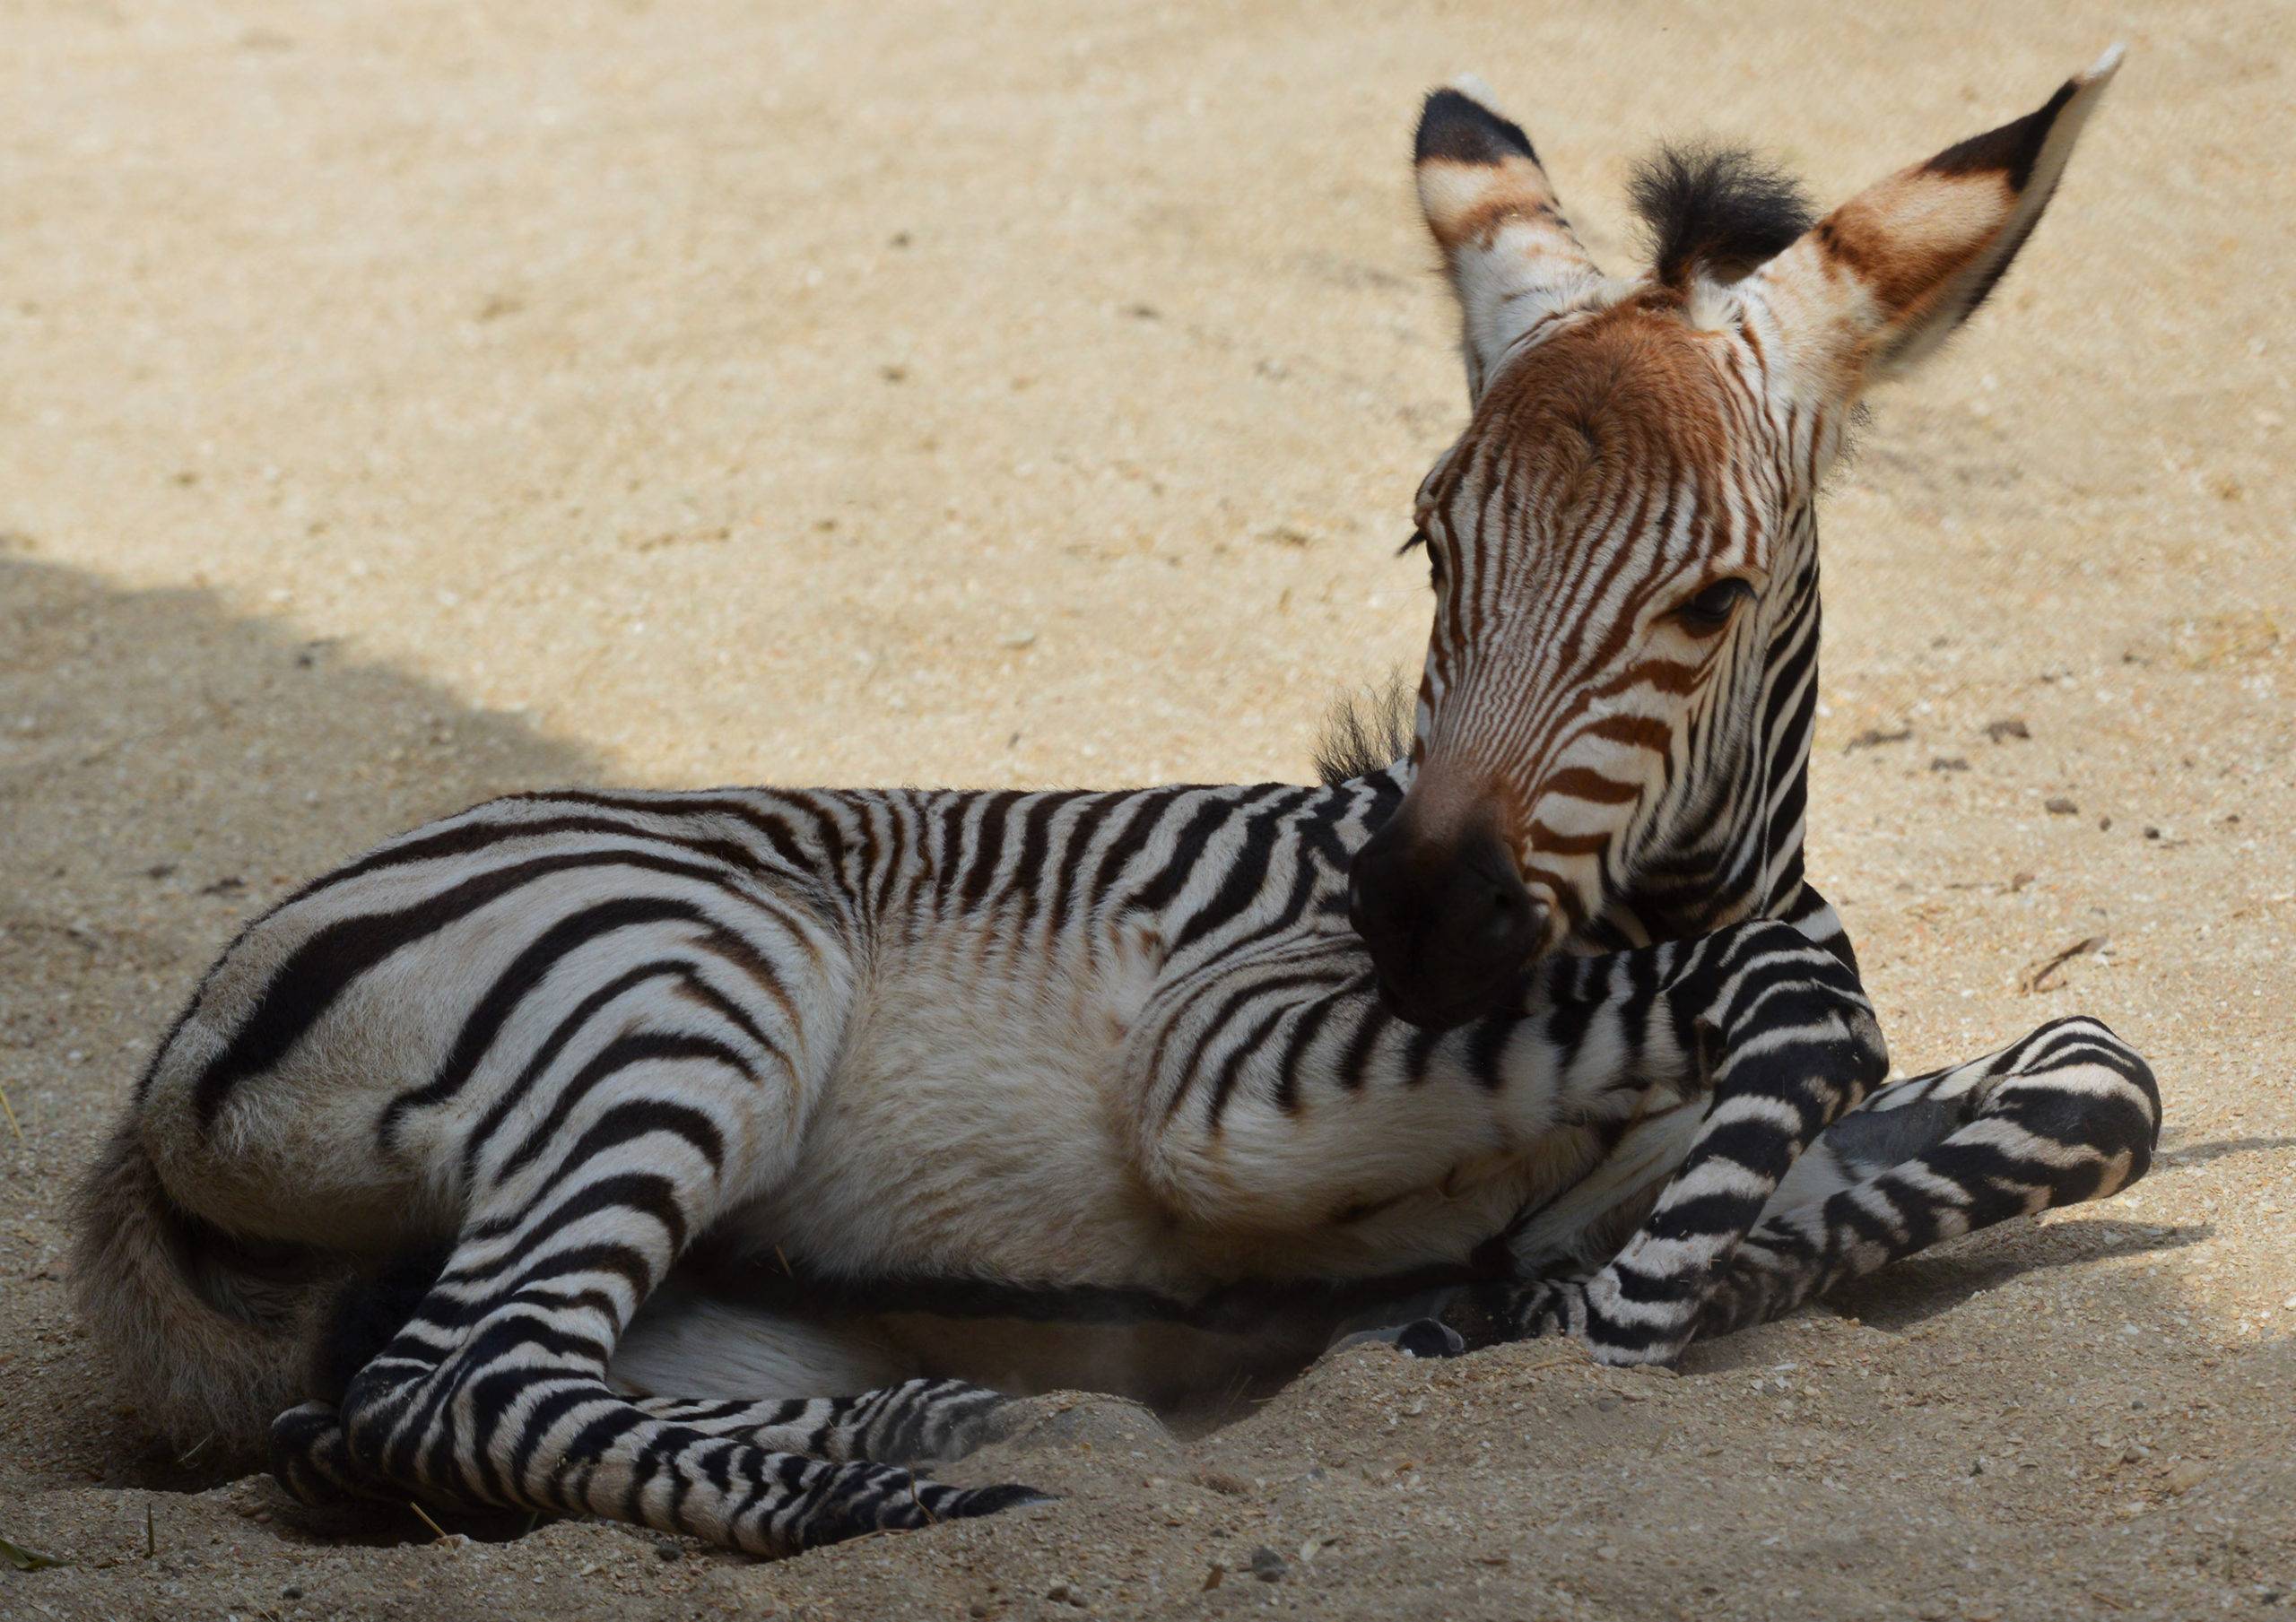 PHOTOS - Disney's Animal Kingdom celebrates two recent animal births